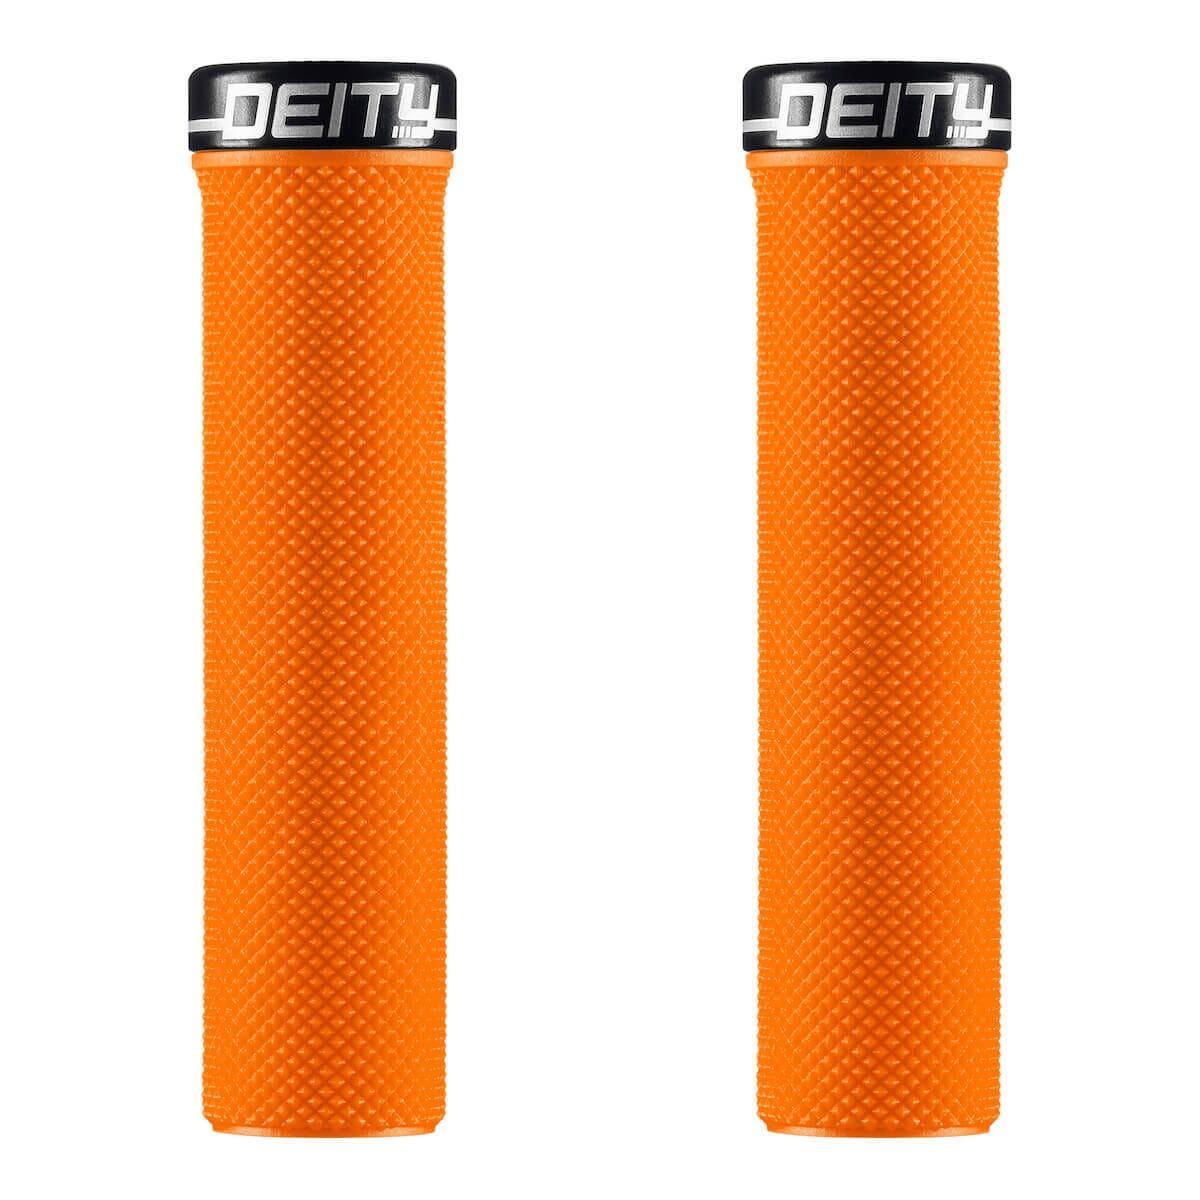 Deity Slimfit Grip Components Deity Components Orange 